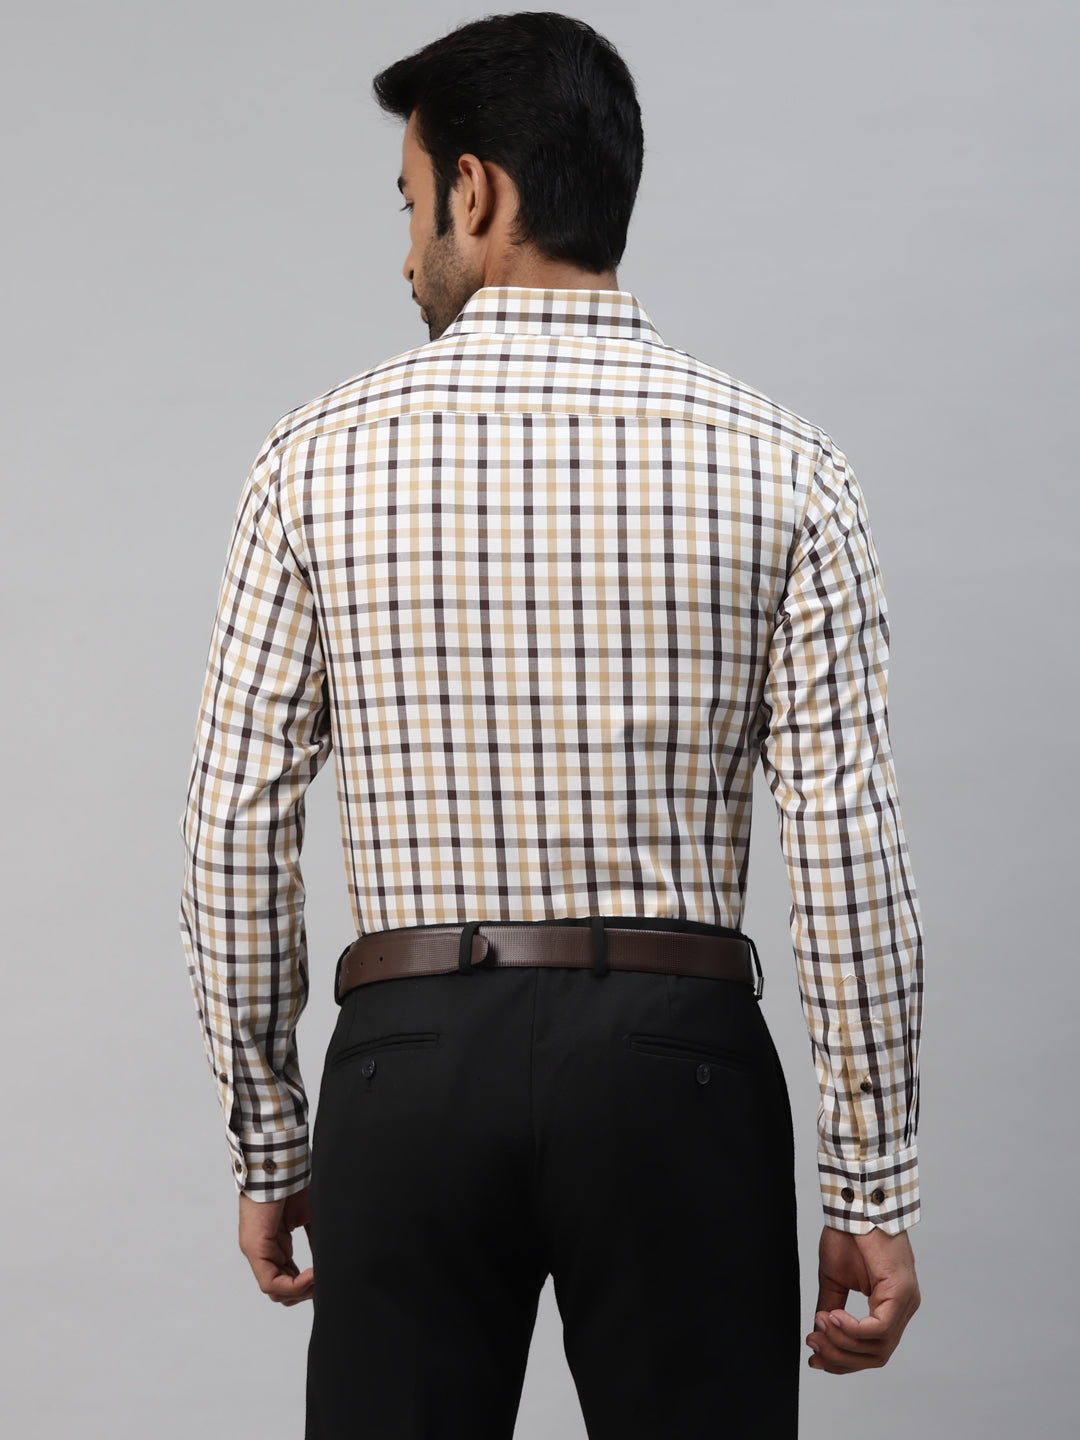 Men's Multicolored Checks Slim Fit Shirt by Don Vino